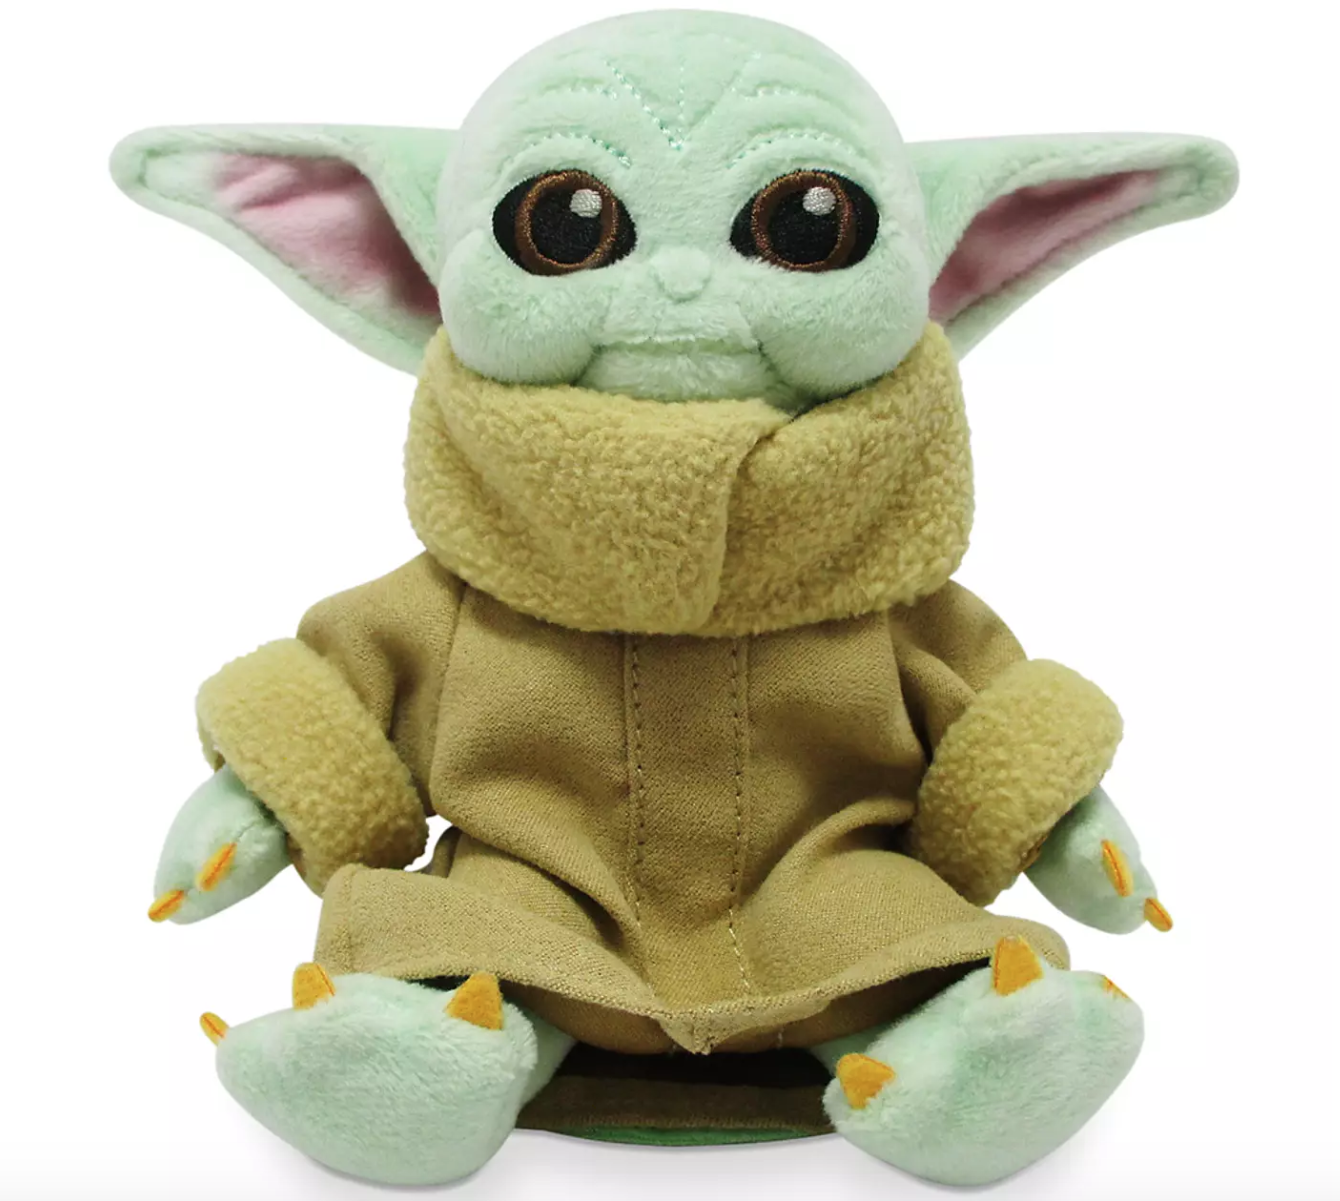 Disney Star Wars Yoda Stuffed Plush Toy Hugger Characters Throw Blanket Set NWT 